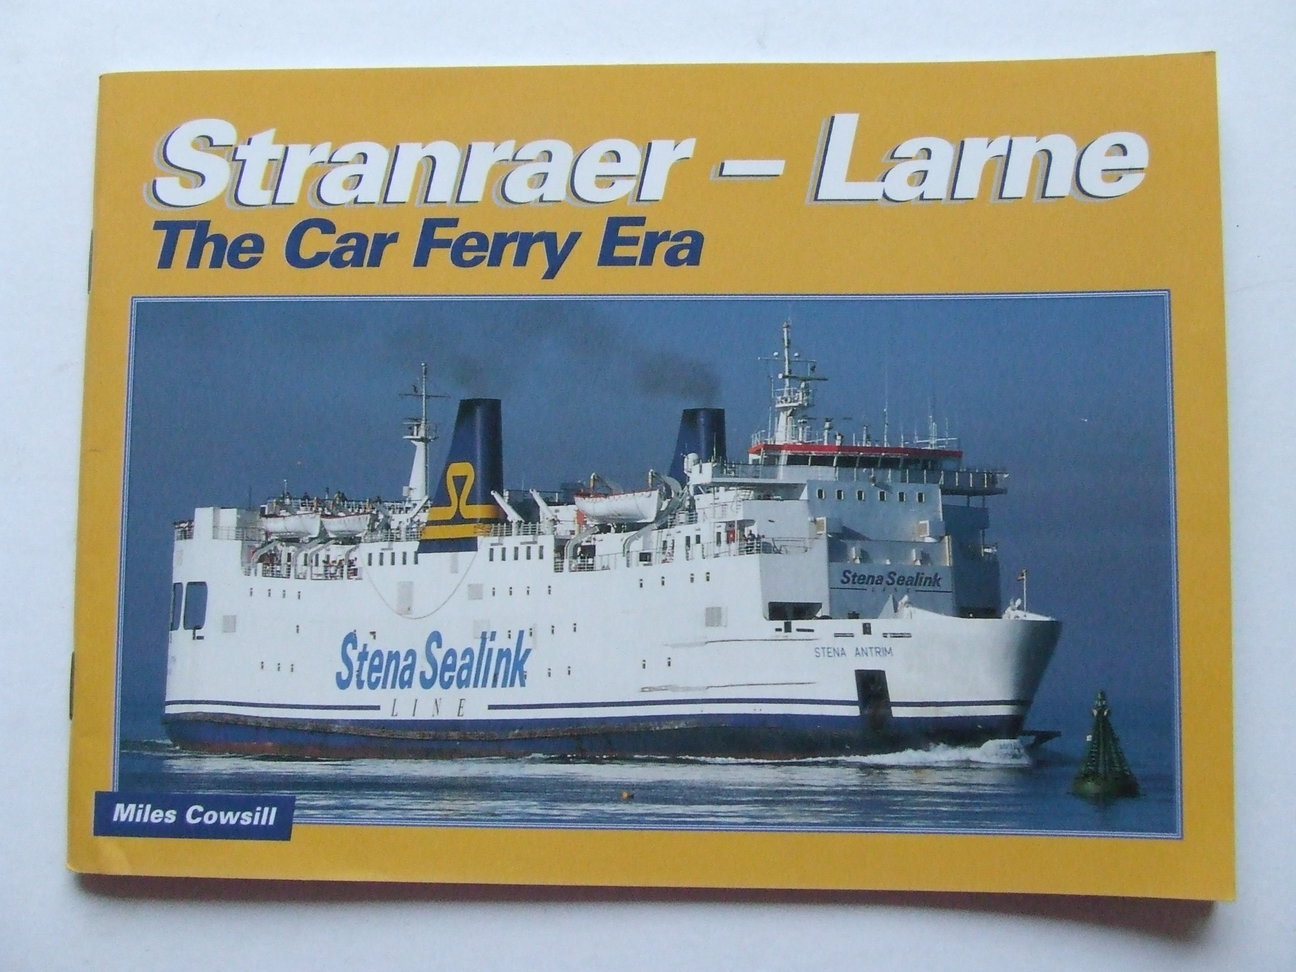 Stranraer - Larne, the car ferry era